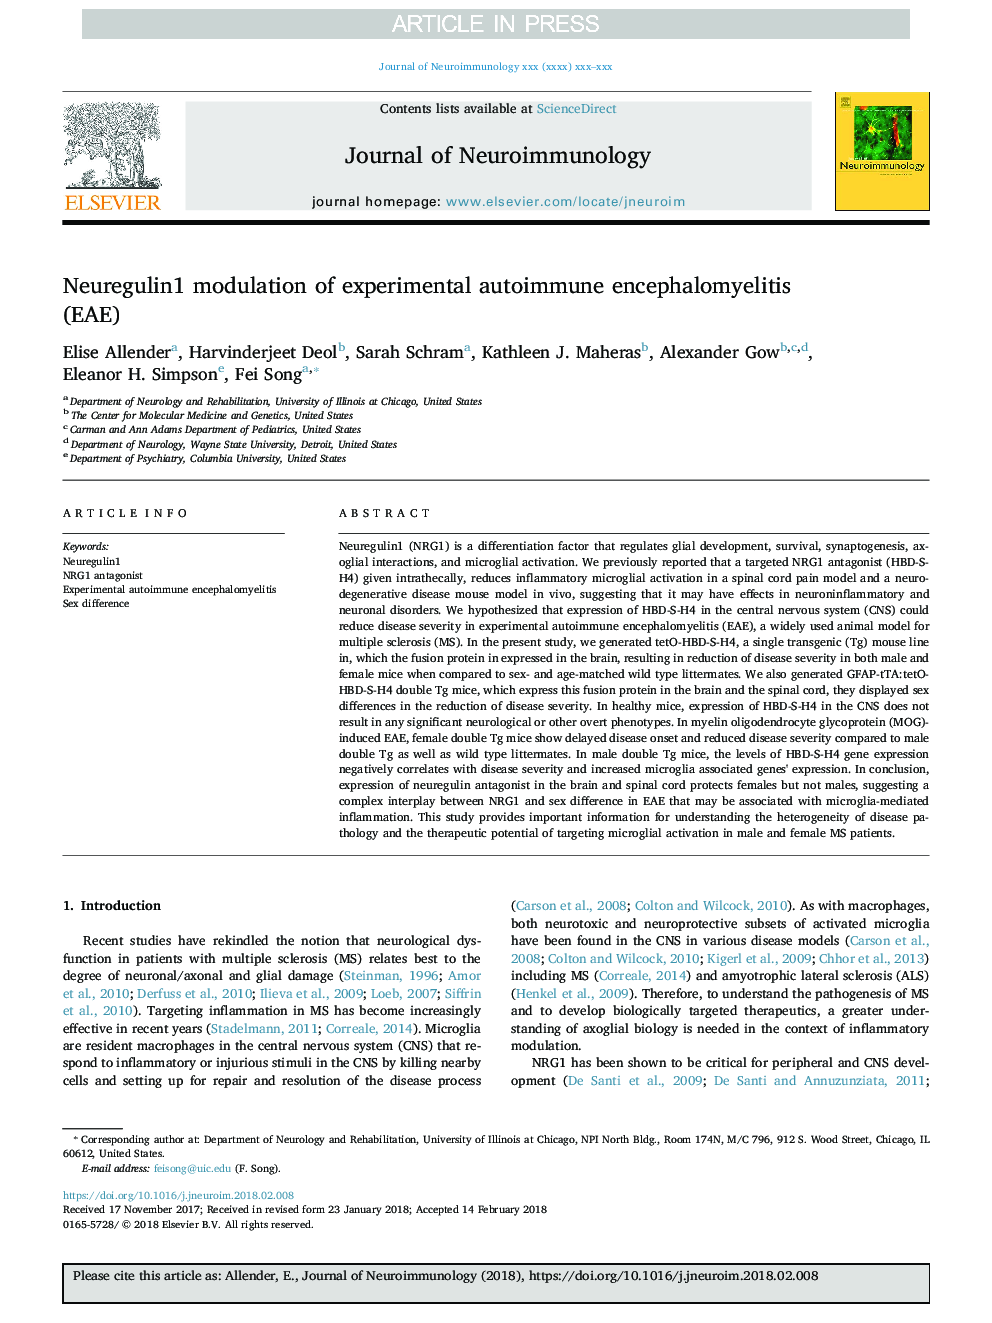 Neuregulin1 modulation of experimental autoimmune encephalomyelitis (EAE)